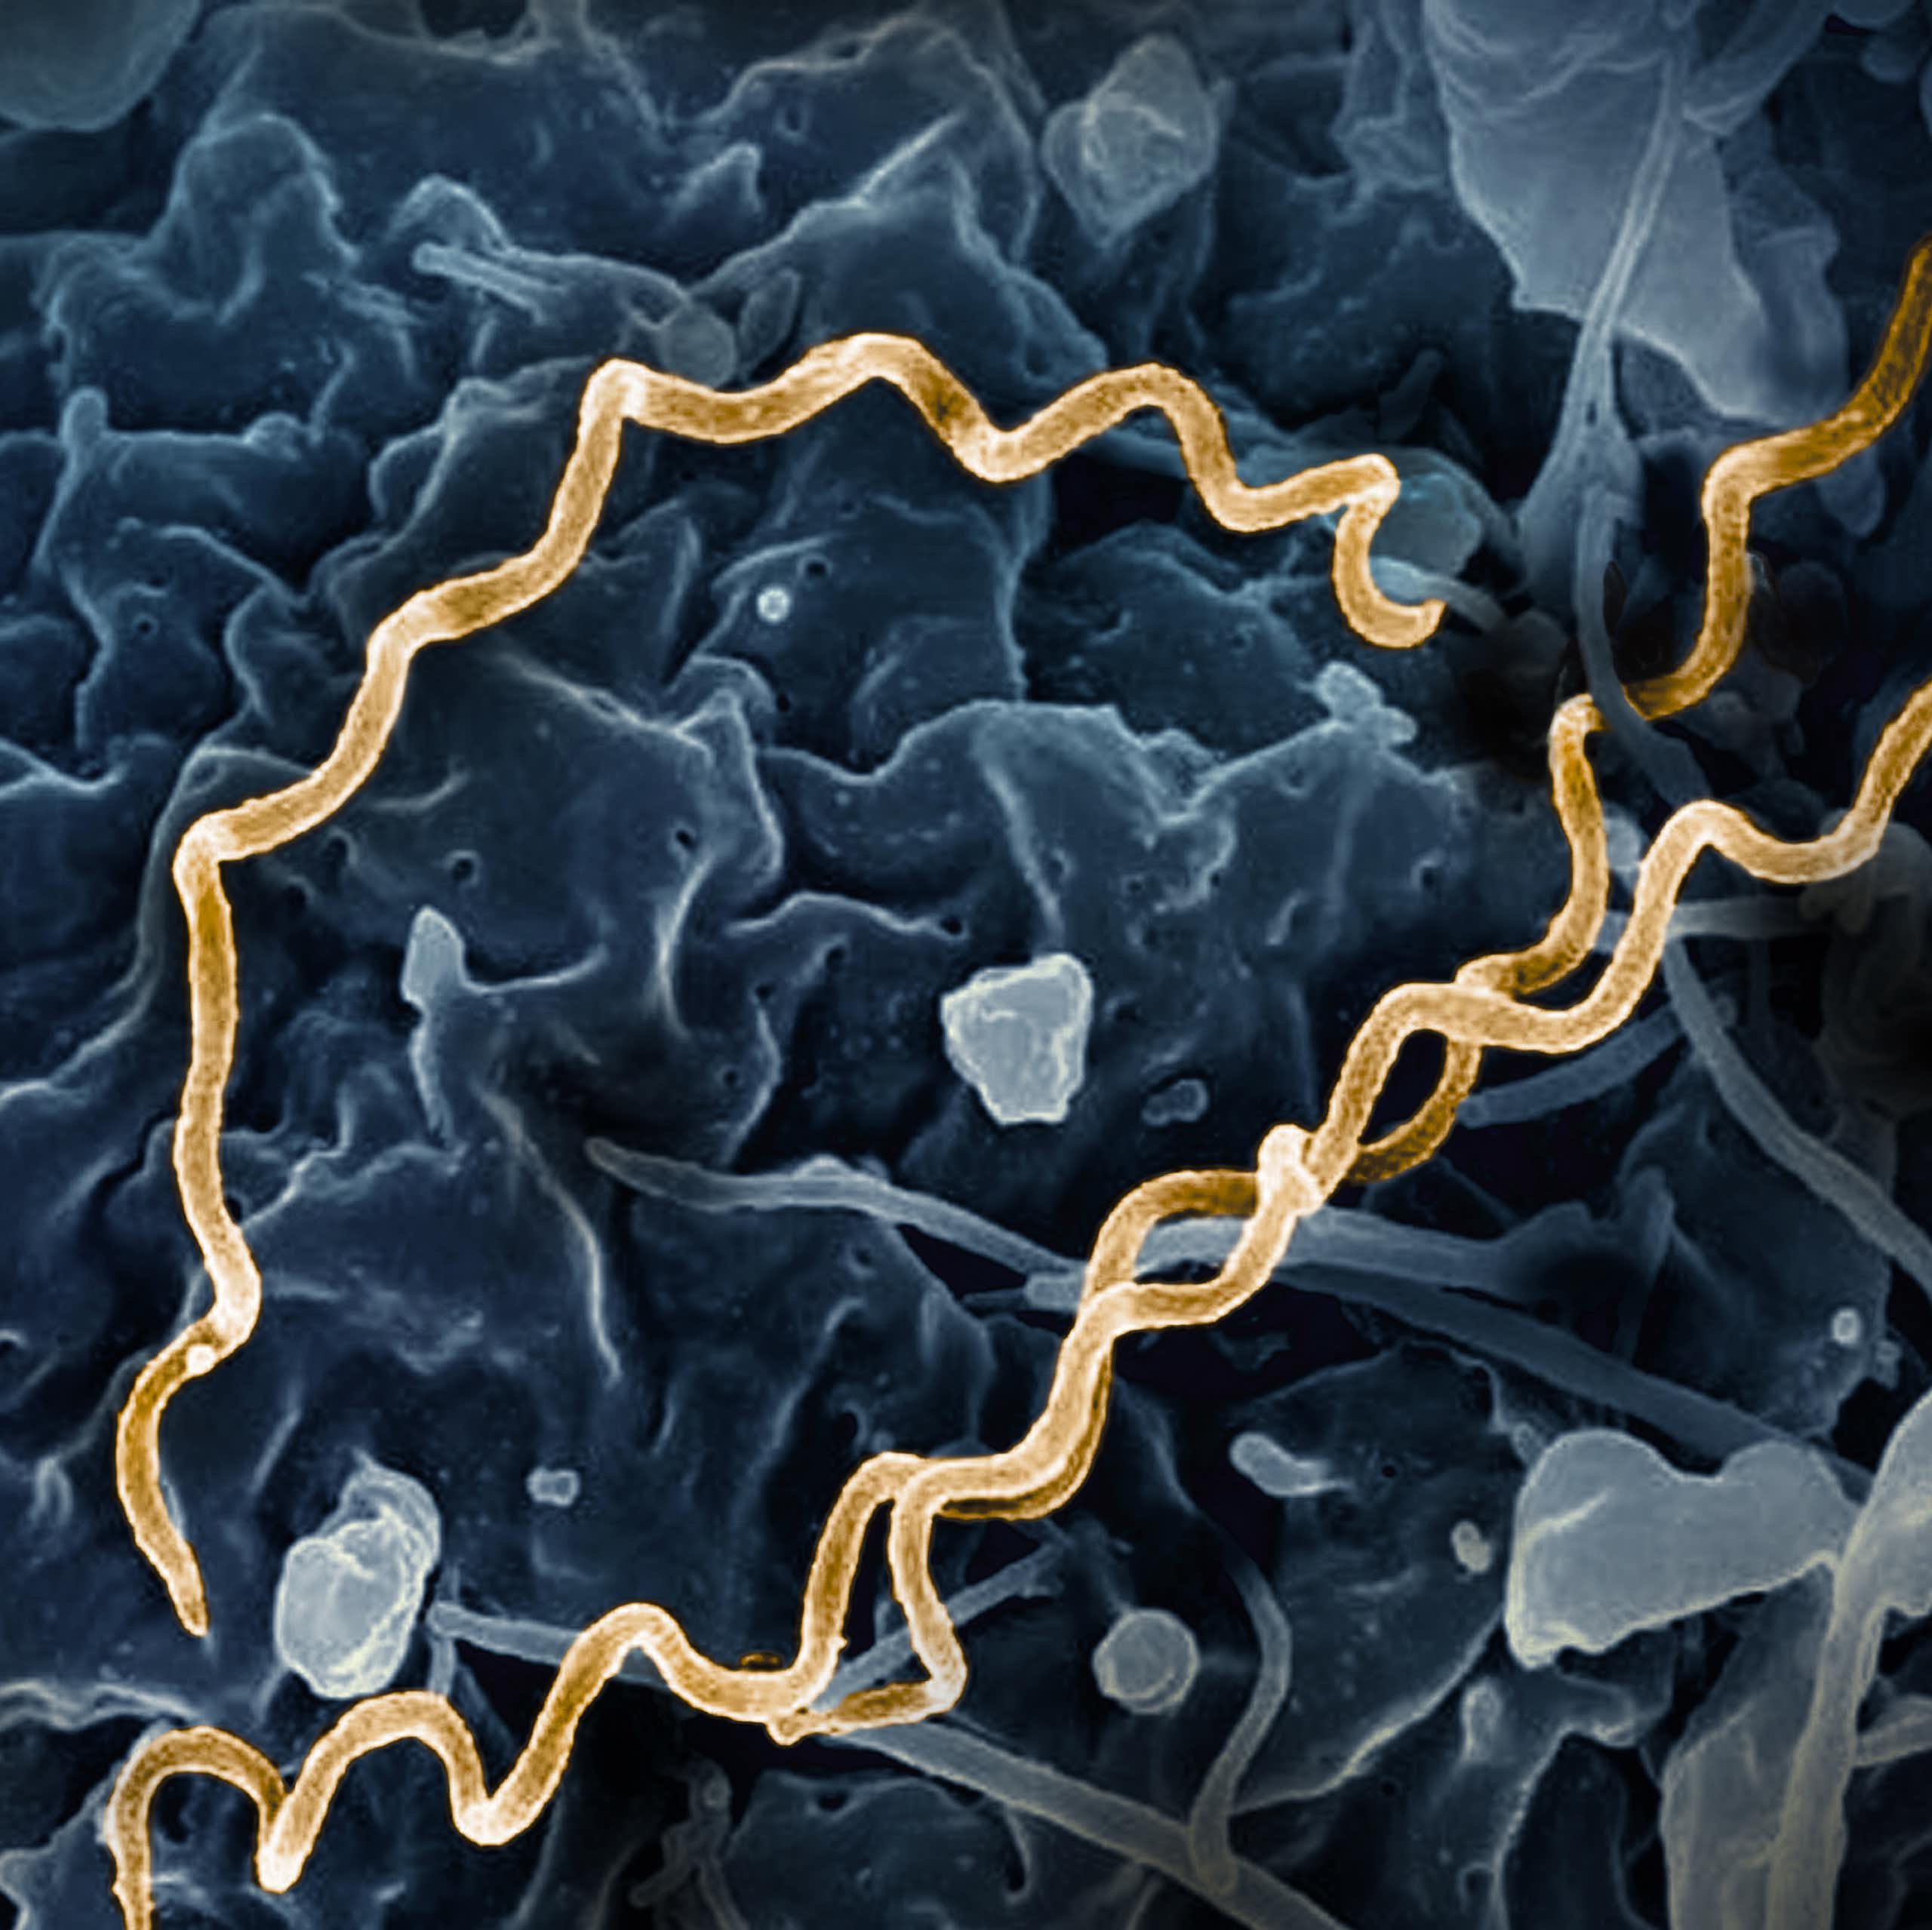 Microscopic view of Treponema pallidum bacteria